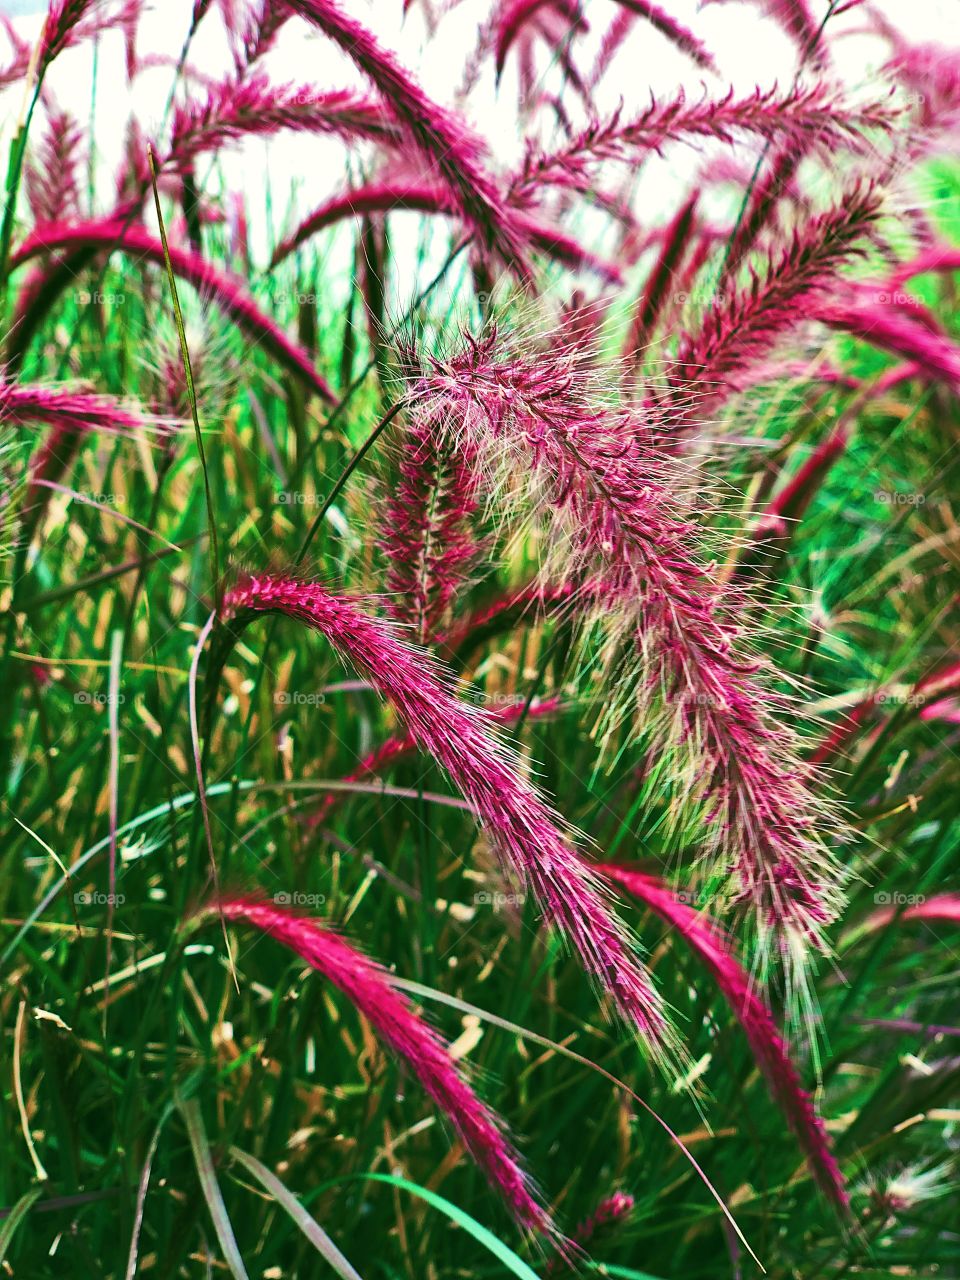 Purple Wild Grasses In The Field, Colorful Grass In California, Fields In California, Closeup Of Grass, Purple In Nature, Details Of Nature 